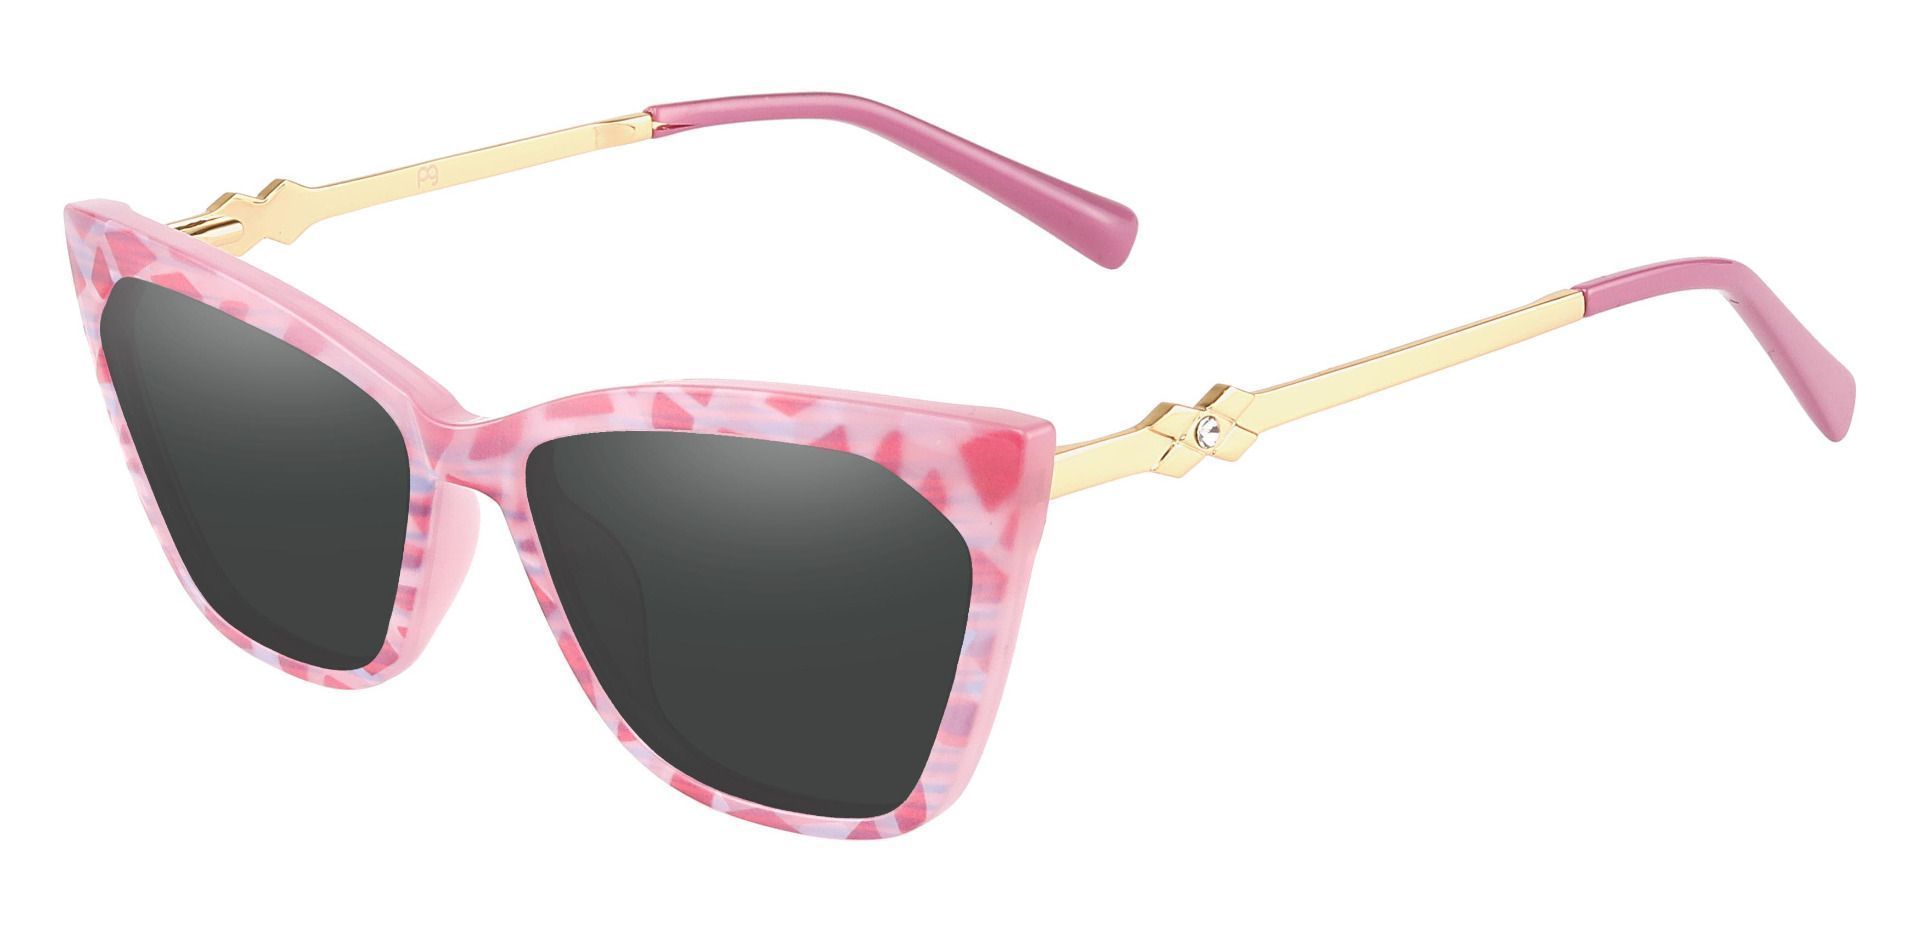 Addison Cat Eye Reading Sunglasses - Pink Frame With Gray Lenses